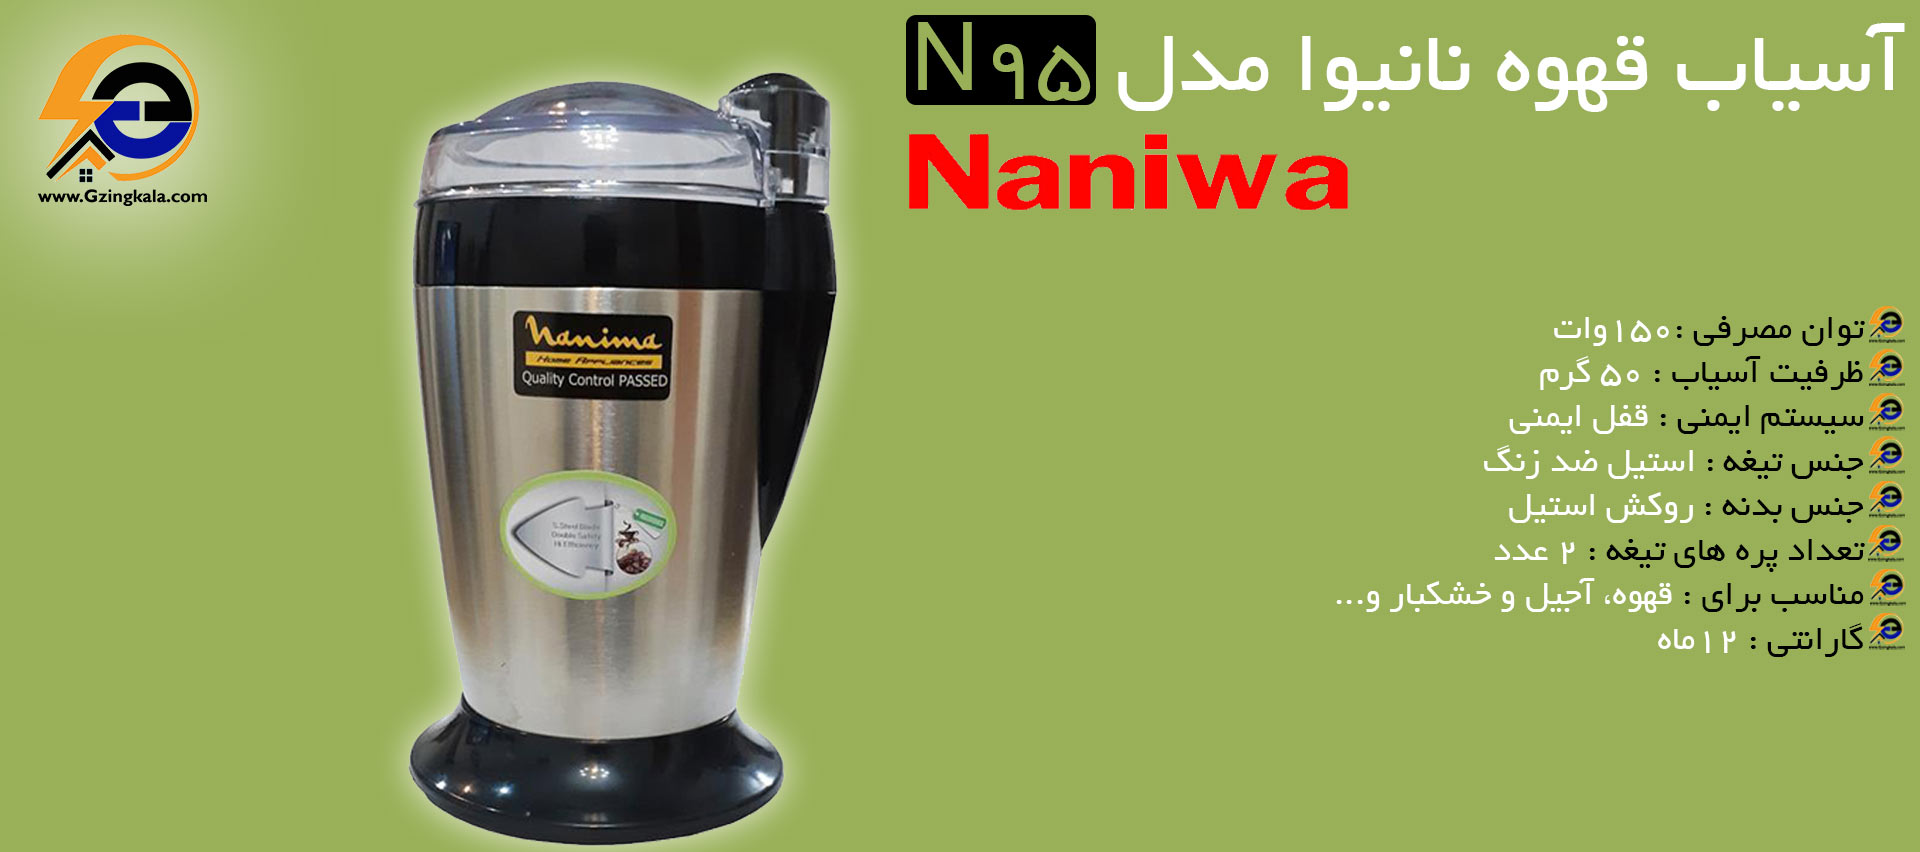 آسیاب قهوه نانیوا مدل N-95